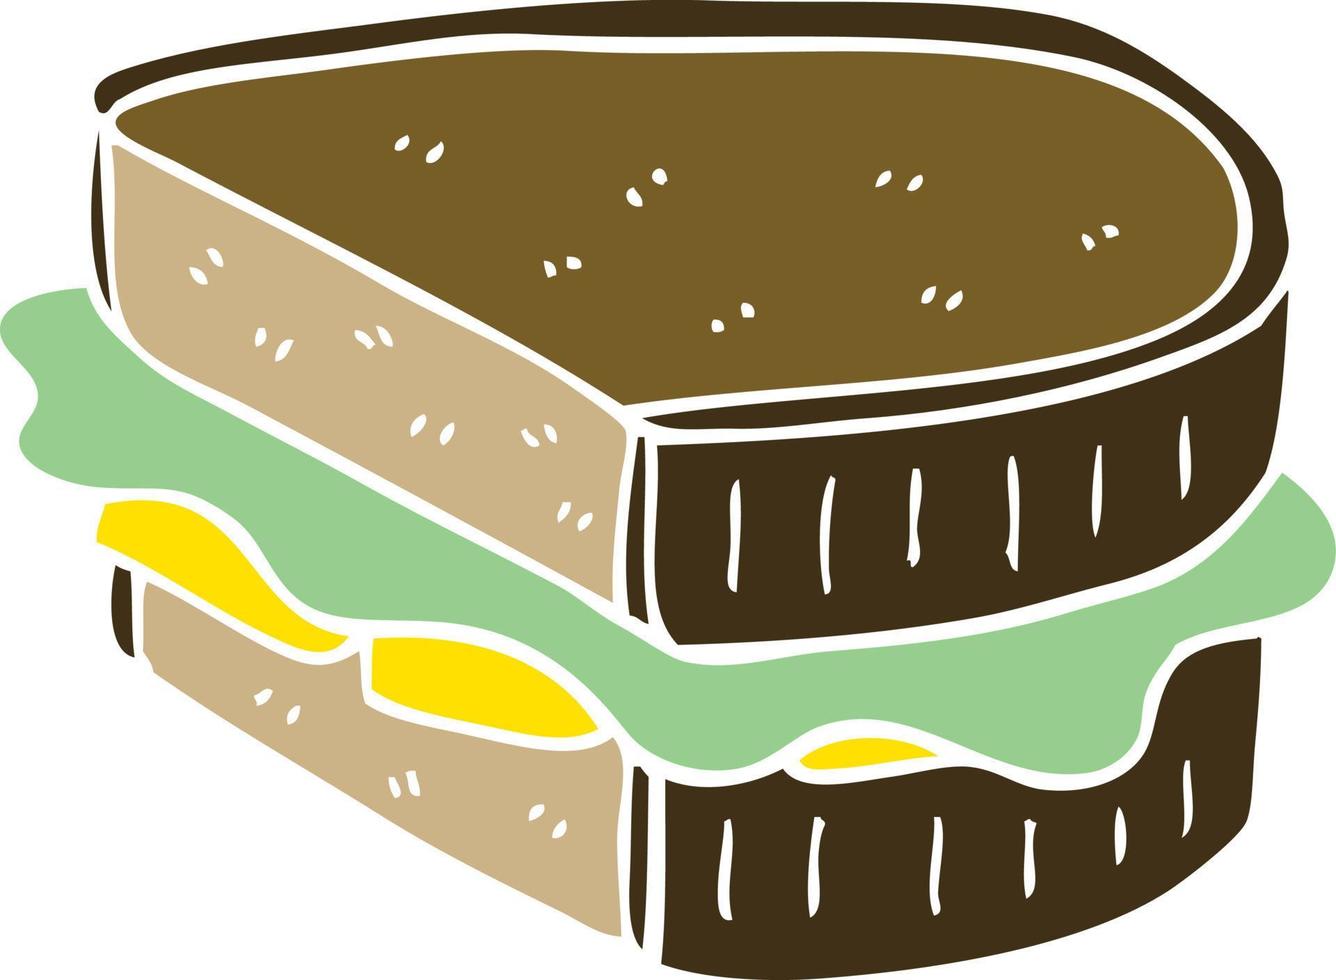 Cartoon-Doodle geladenes Sandwich vektor